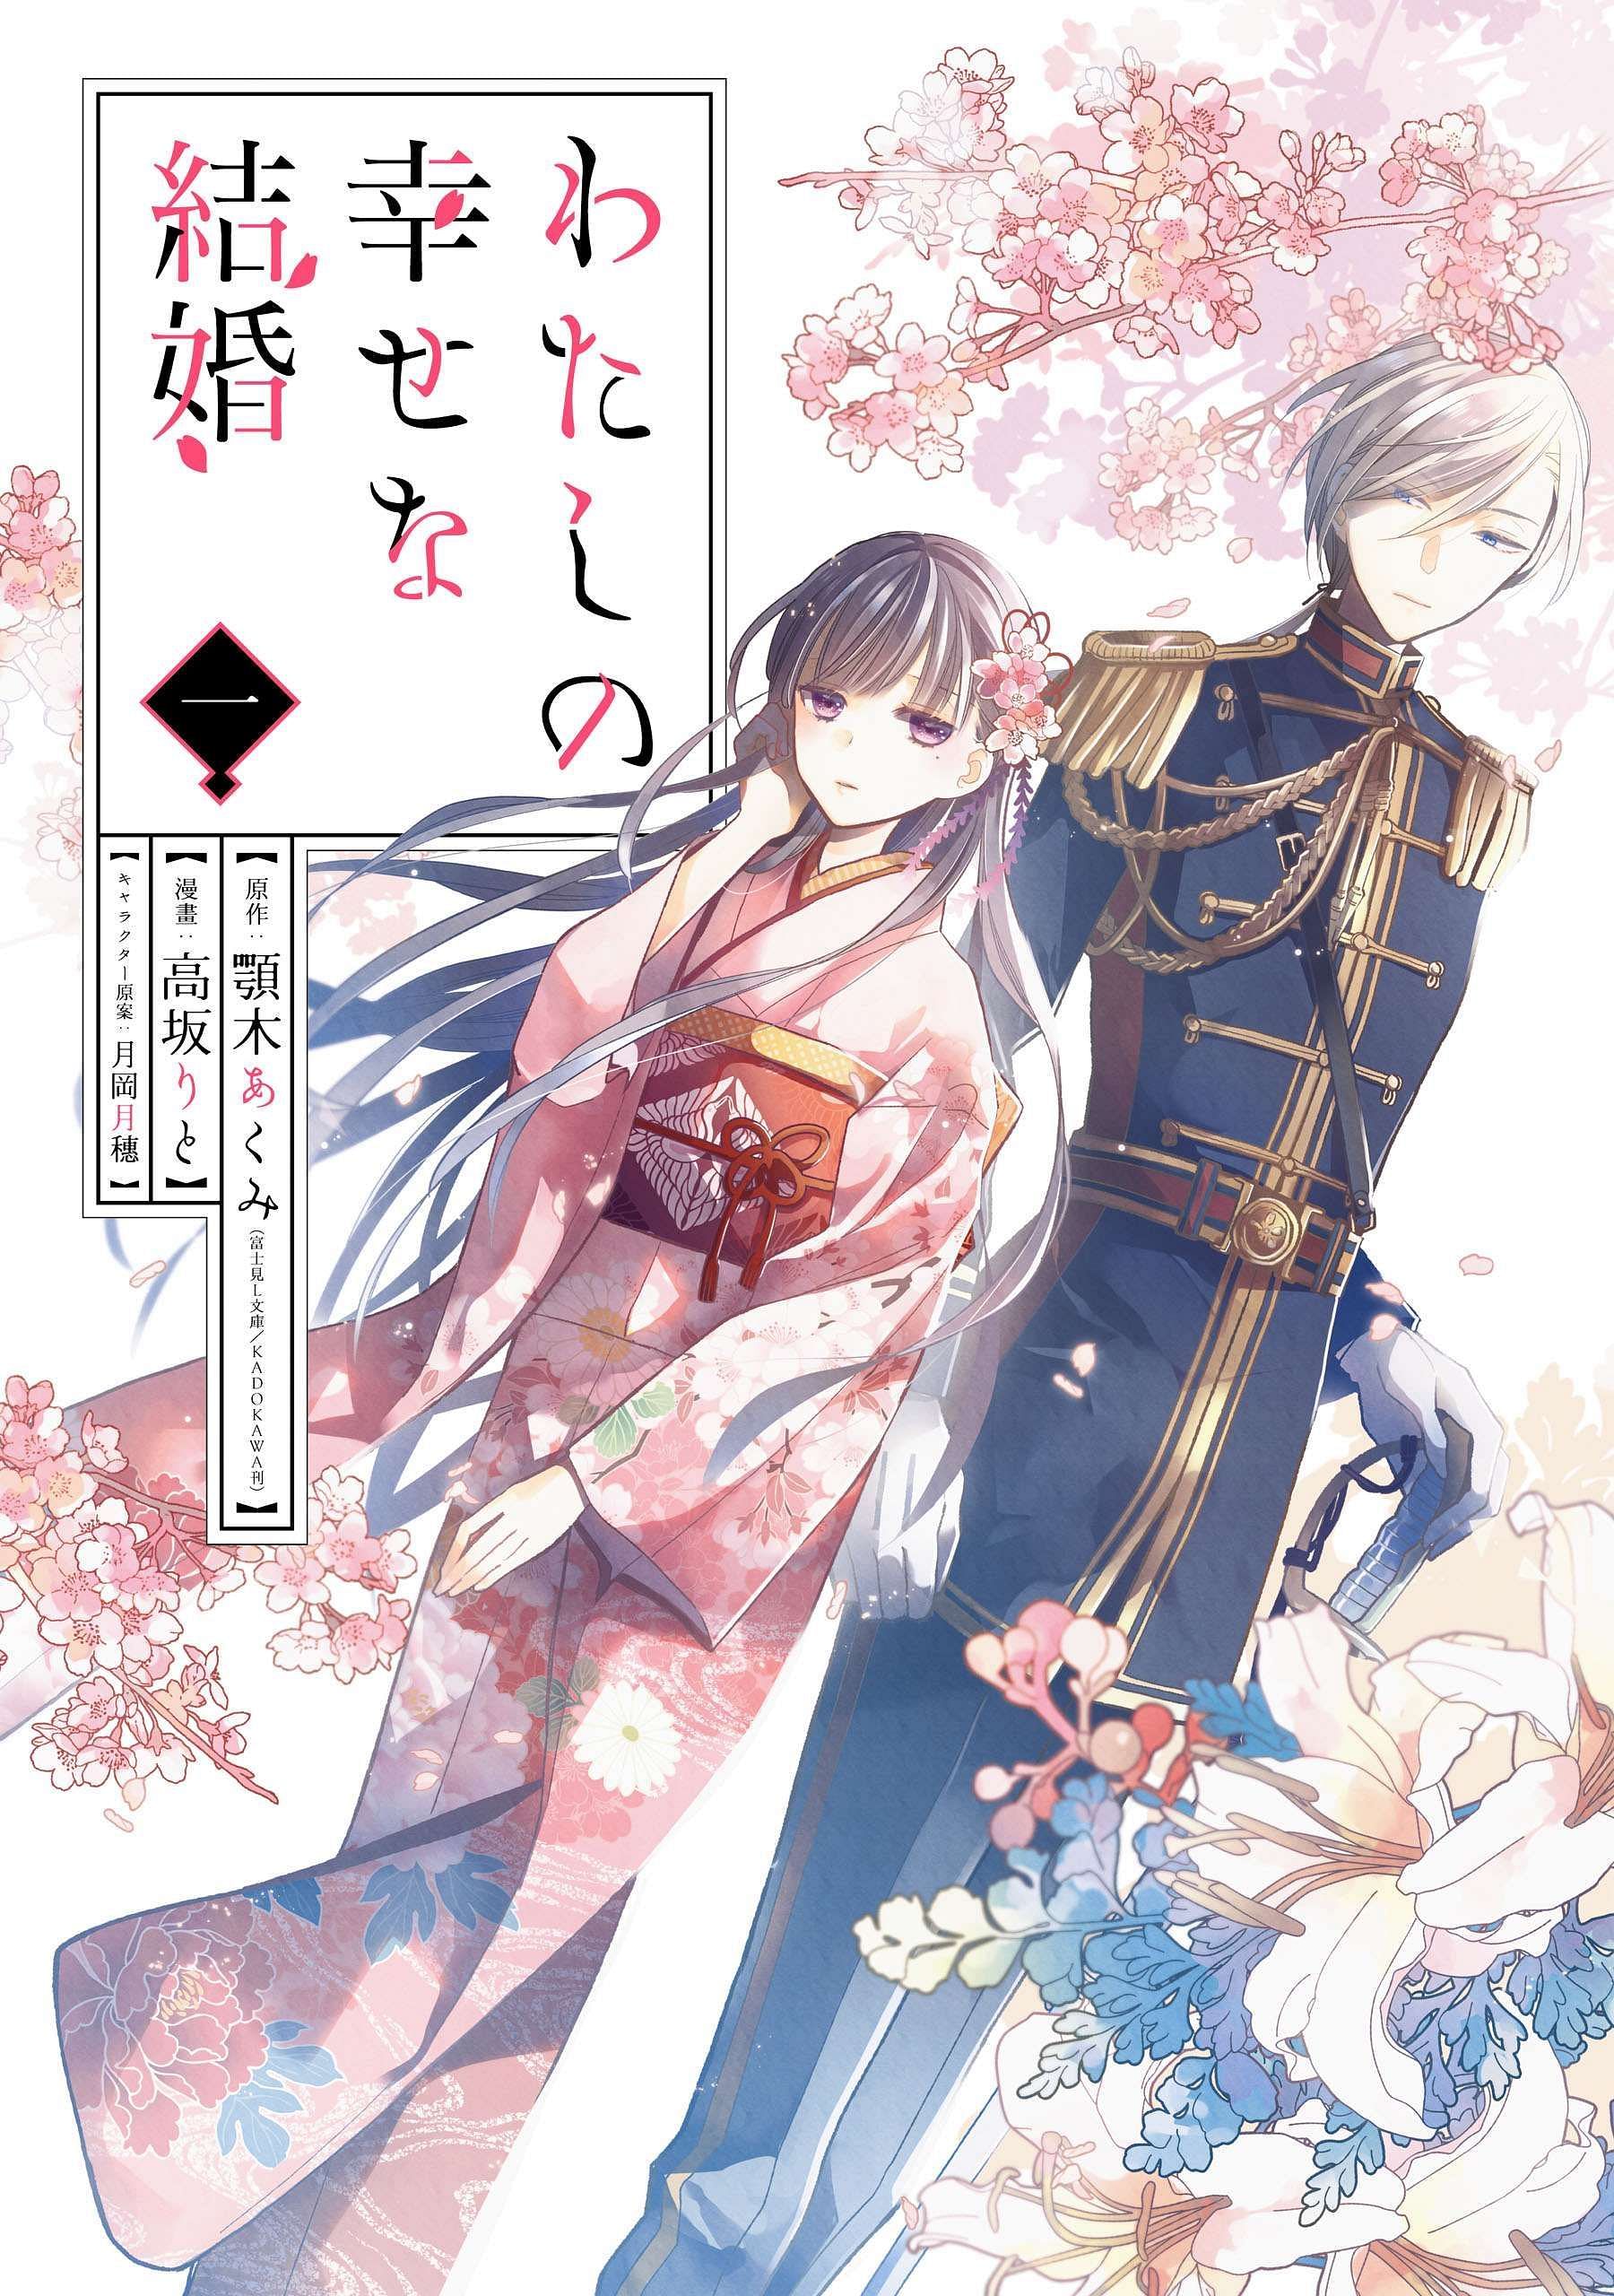 My Happy Marriage Manga Cover (Image via Square Enix)